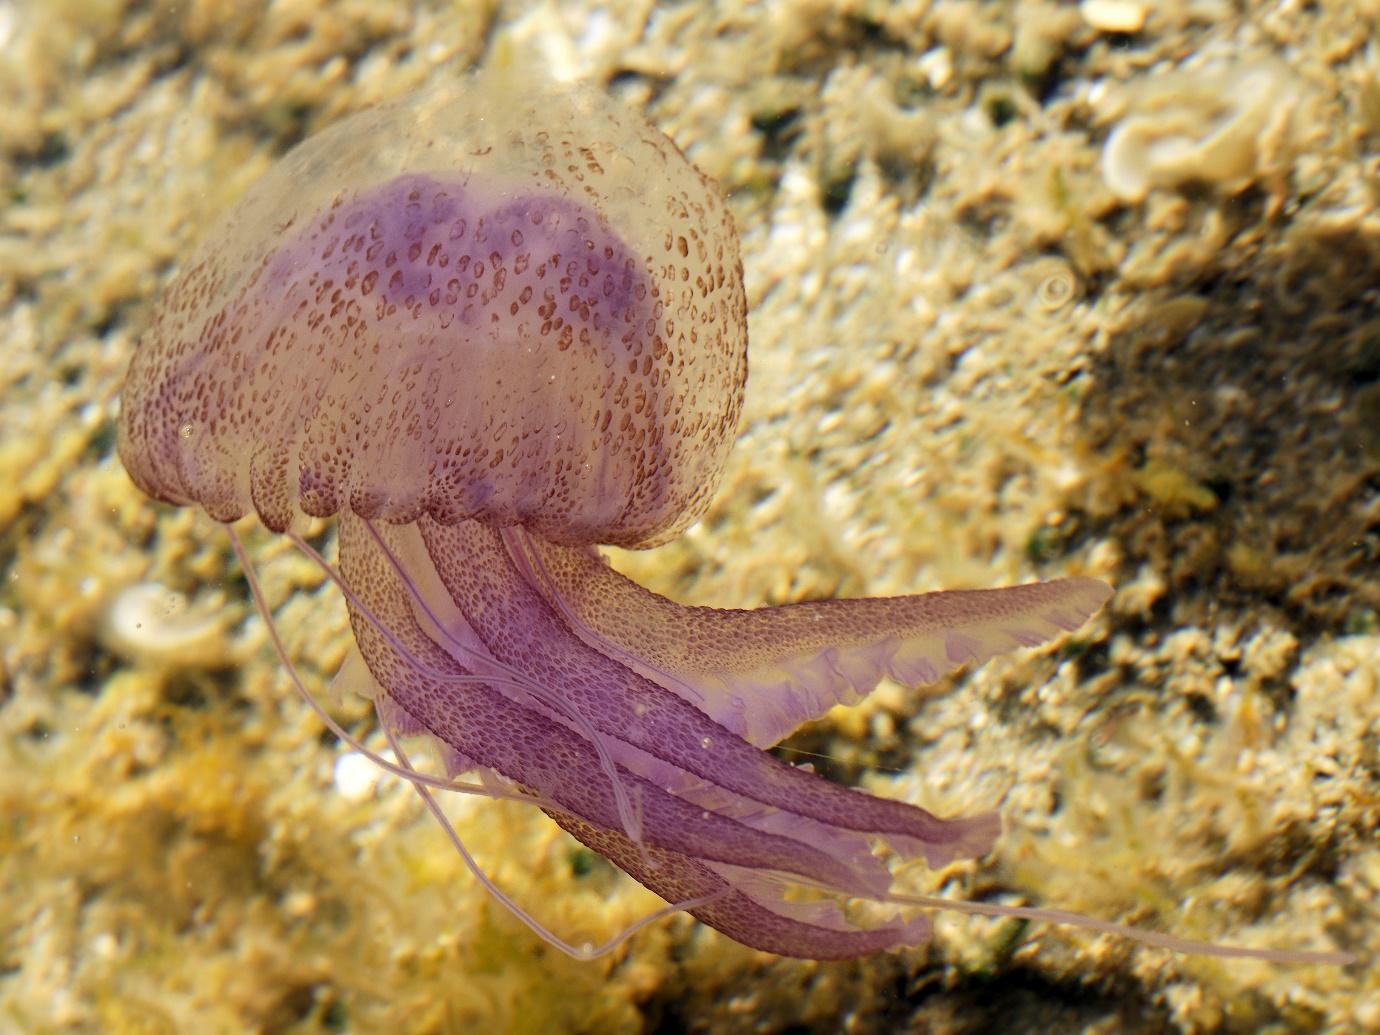 Purple Stinger jellyfish